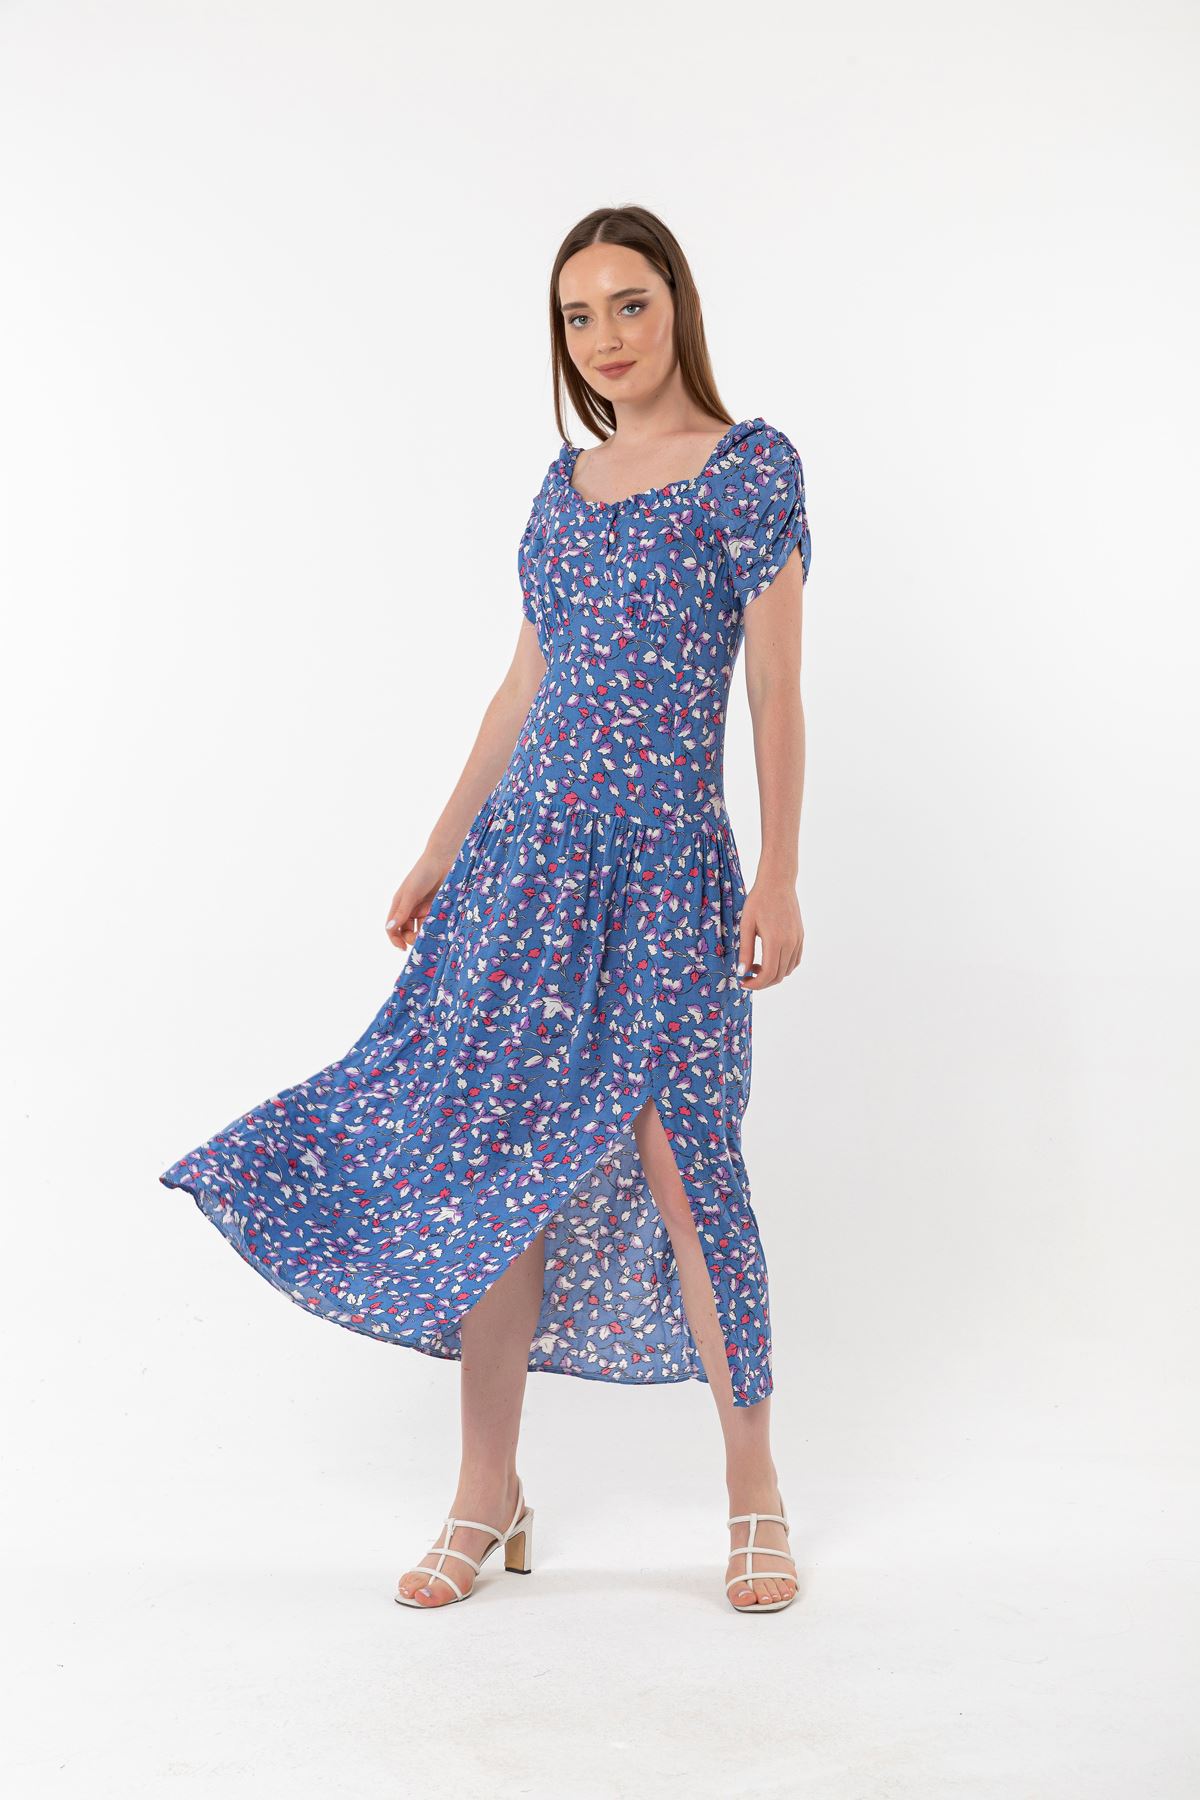 فستان نسائي قماش استيعاب ذراع قصير طوق مربع ميدي قالب مريح نمط زهرة - ازرق